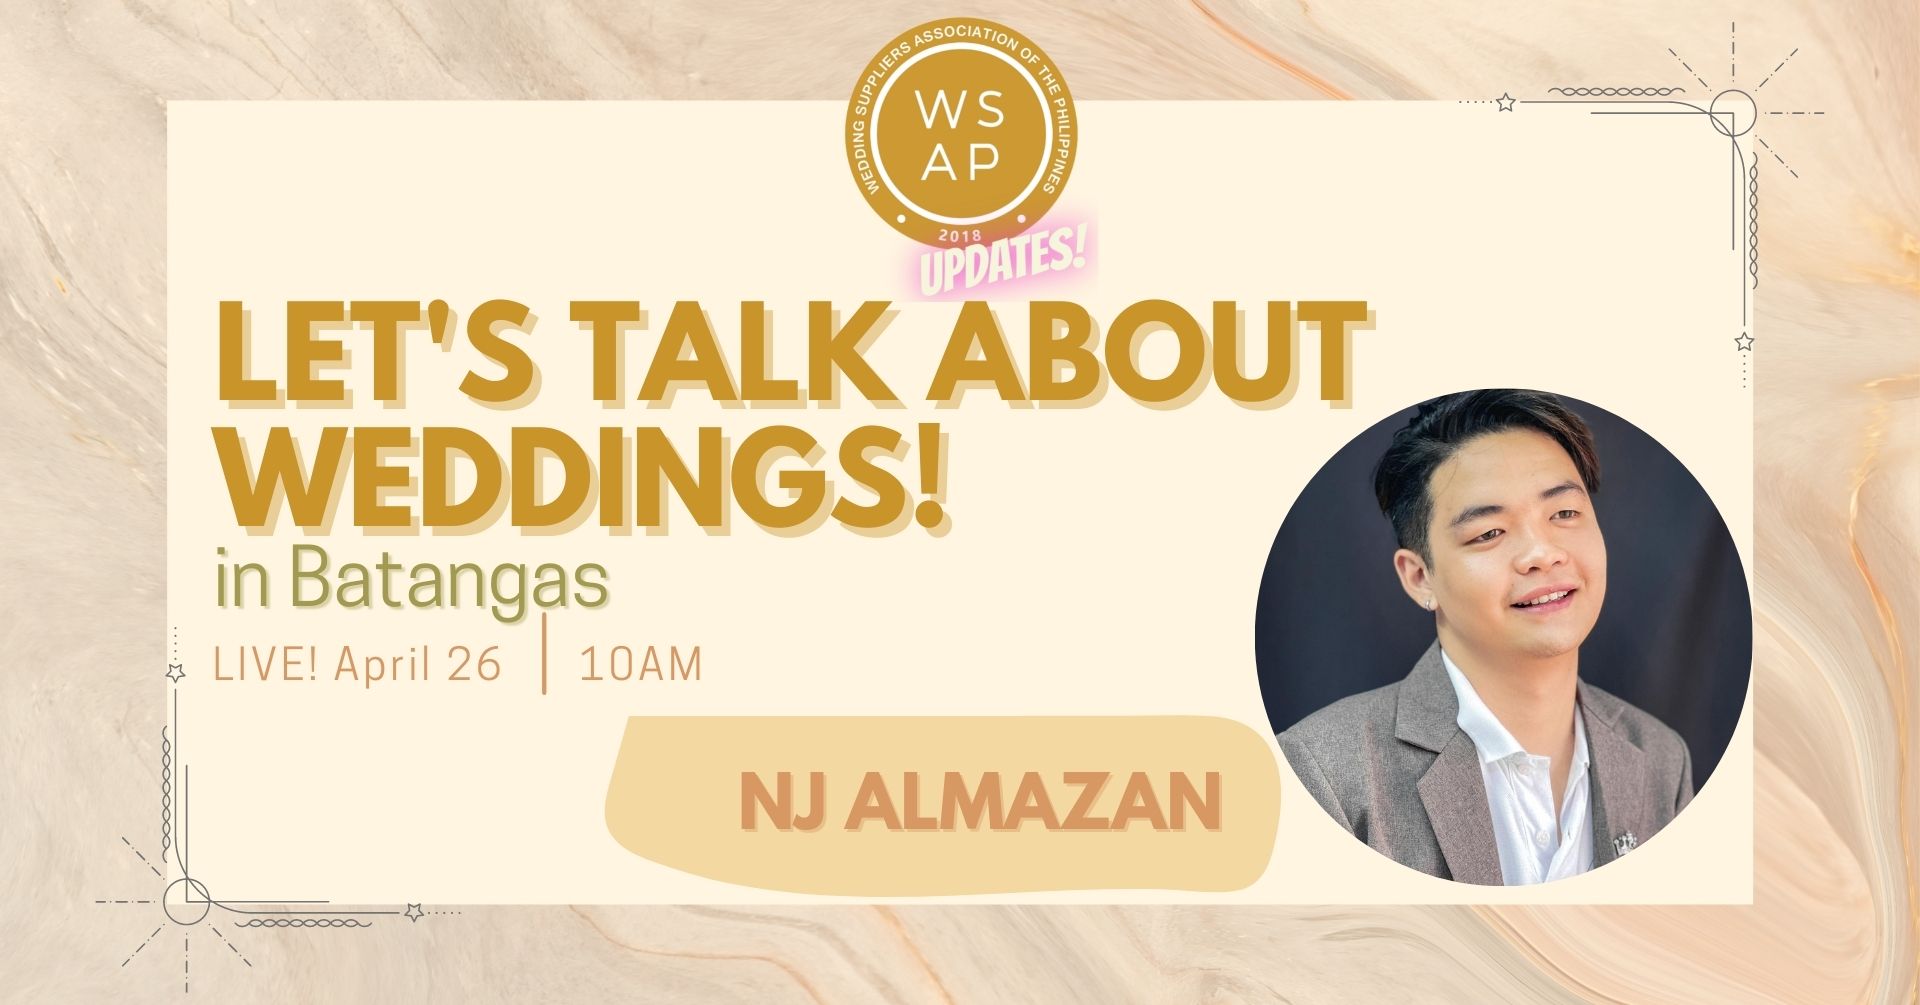 Let's Talk About Weddings in Batangas with NJ Almazan